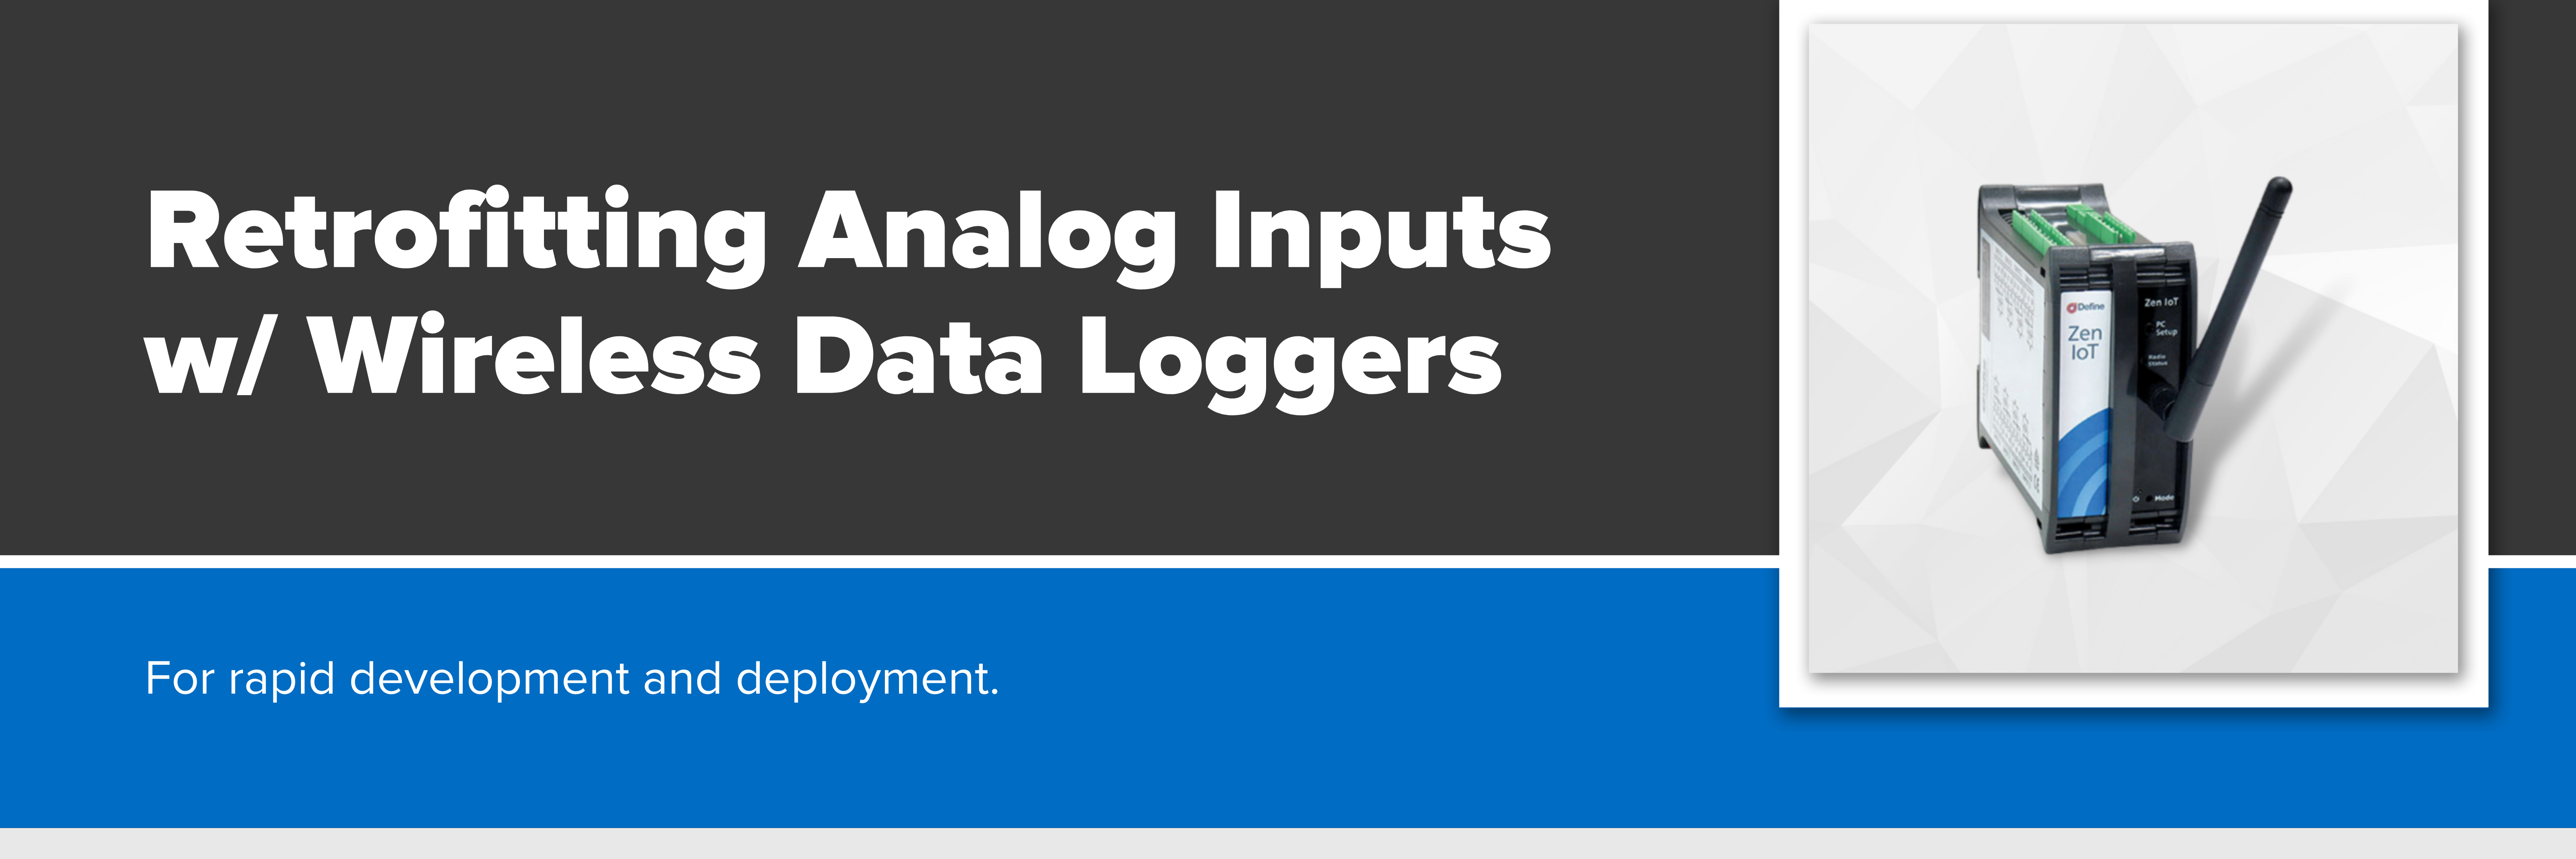 Header image with text "Retrofitting Analog Inputs w/ Wireless Data Loggers"